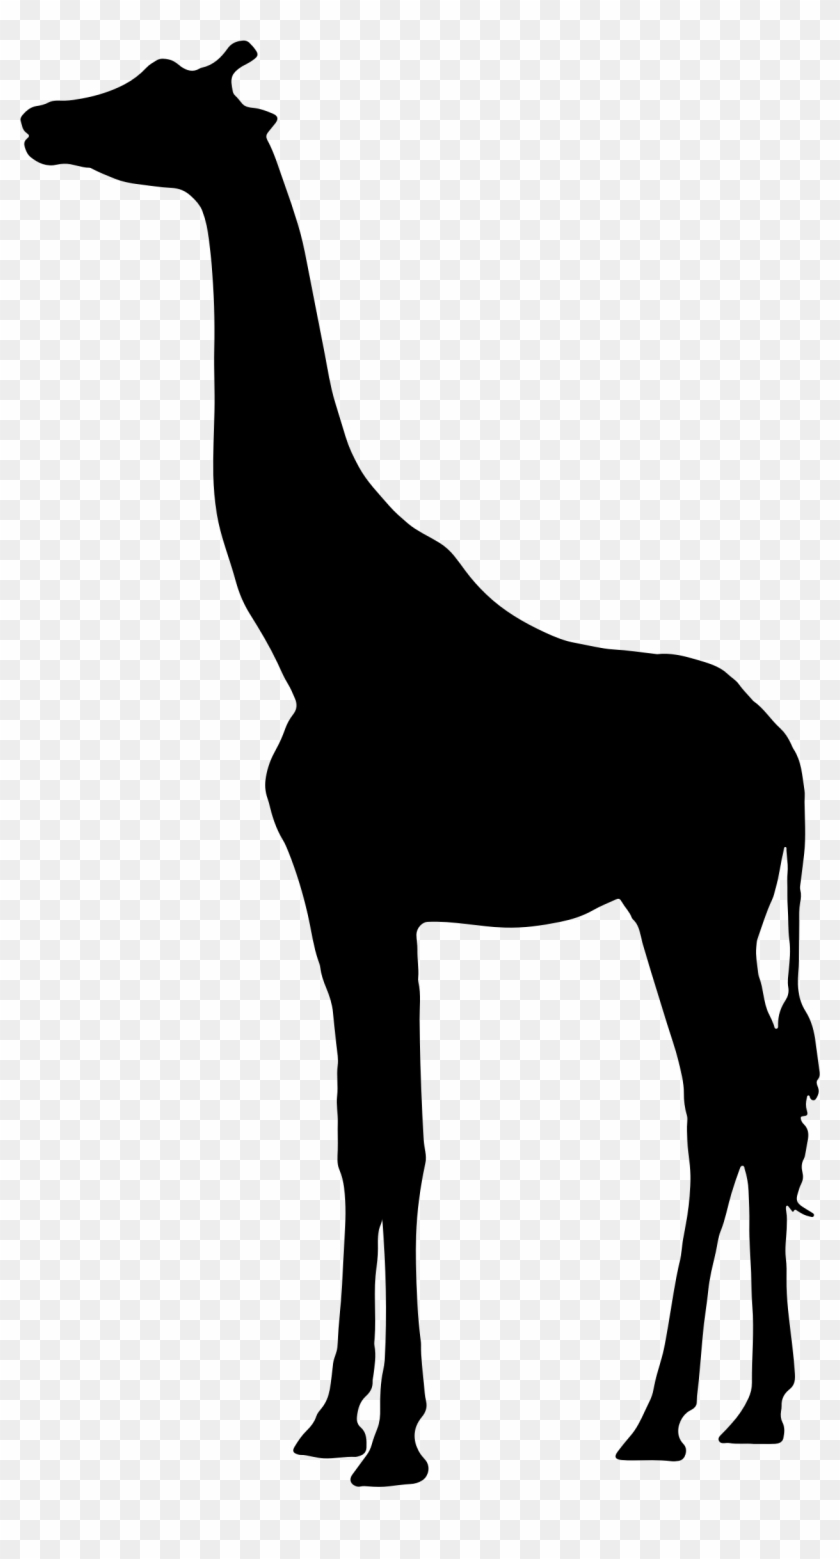 Fresh Idea Giraffe Silhouette Clipart 3 Big Image Png - Silhouette Of A Giraffe #5815